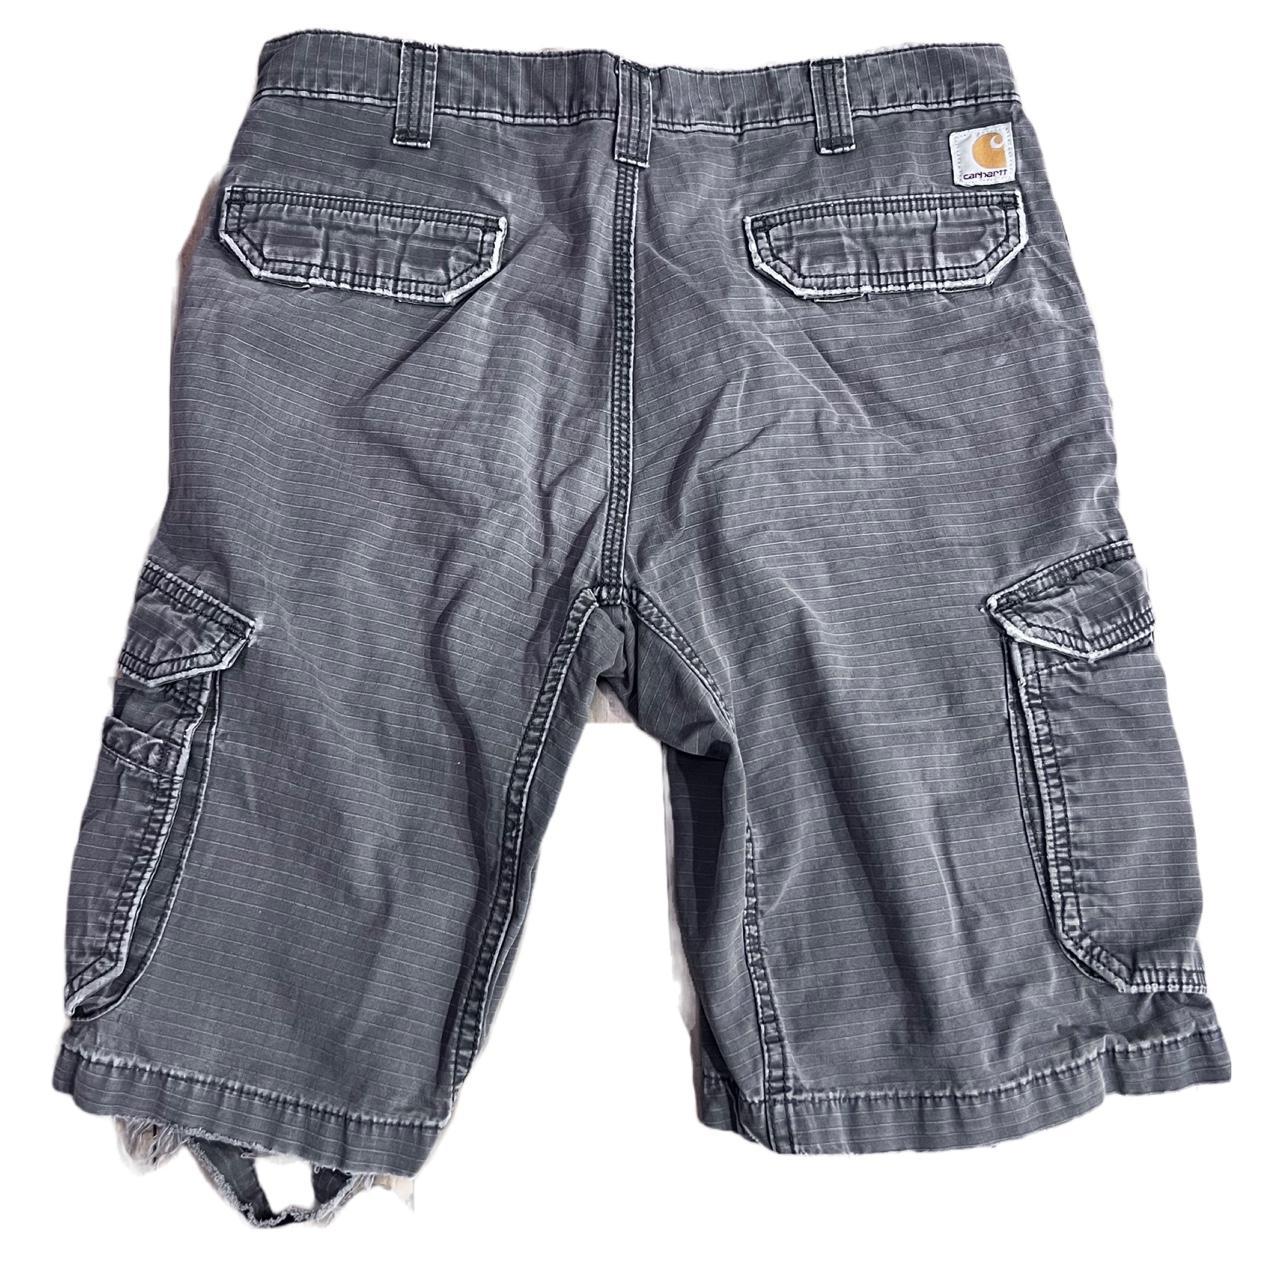 Carhartt Men's Shorts | Depop